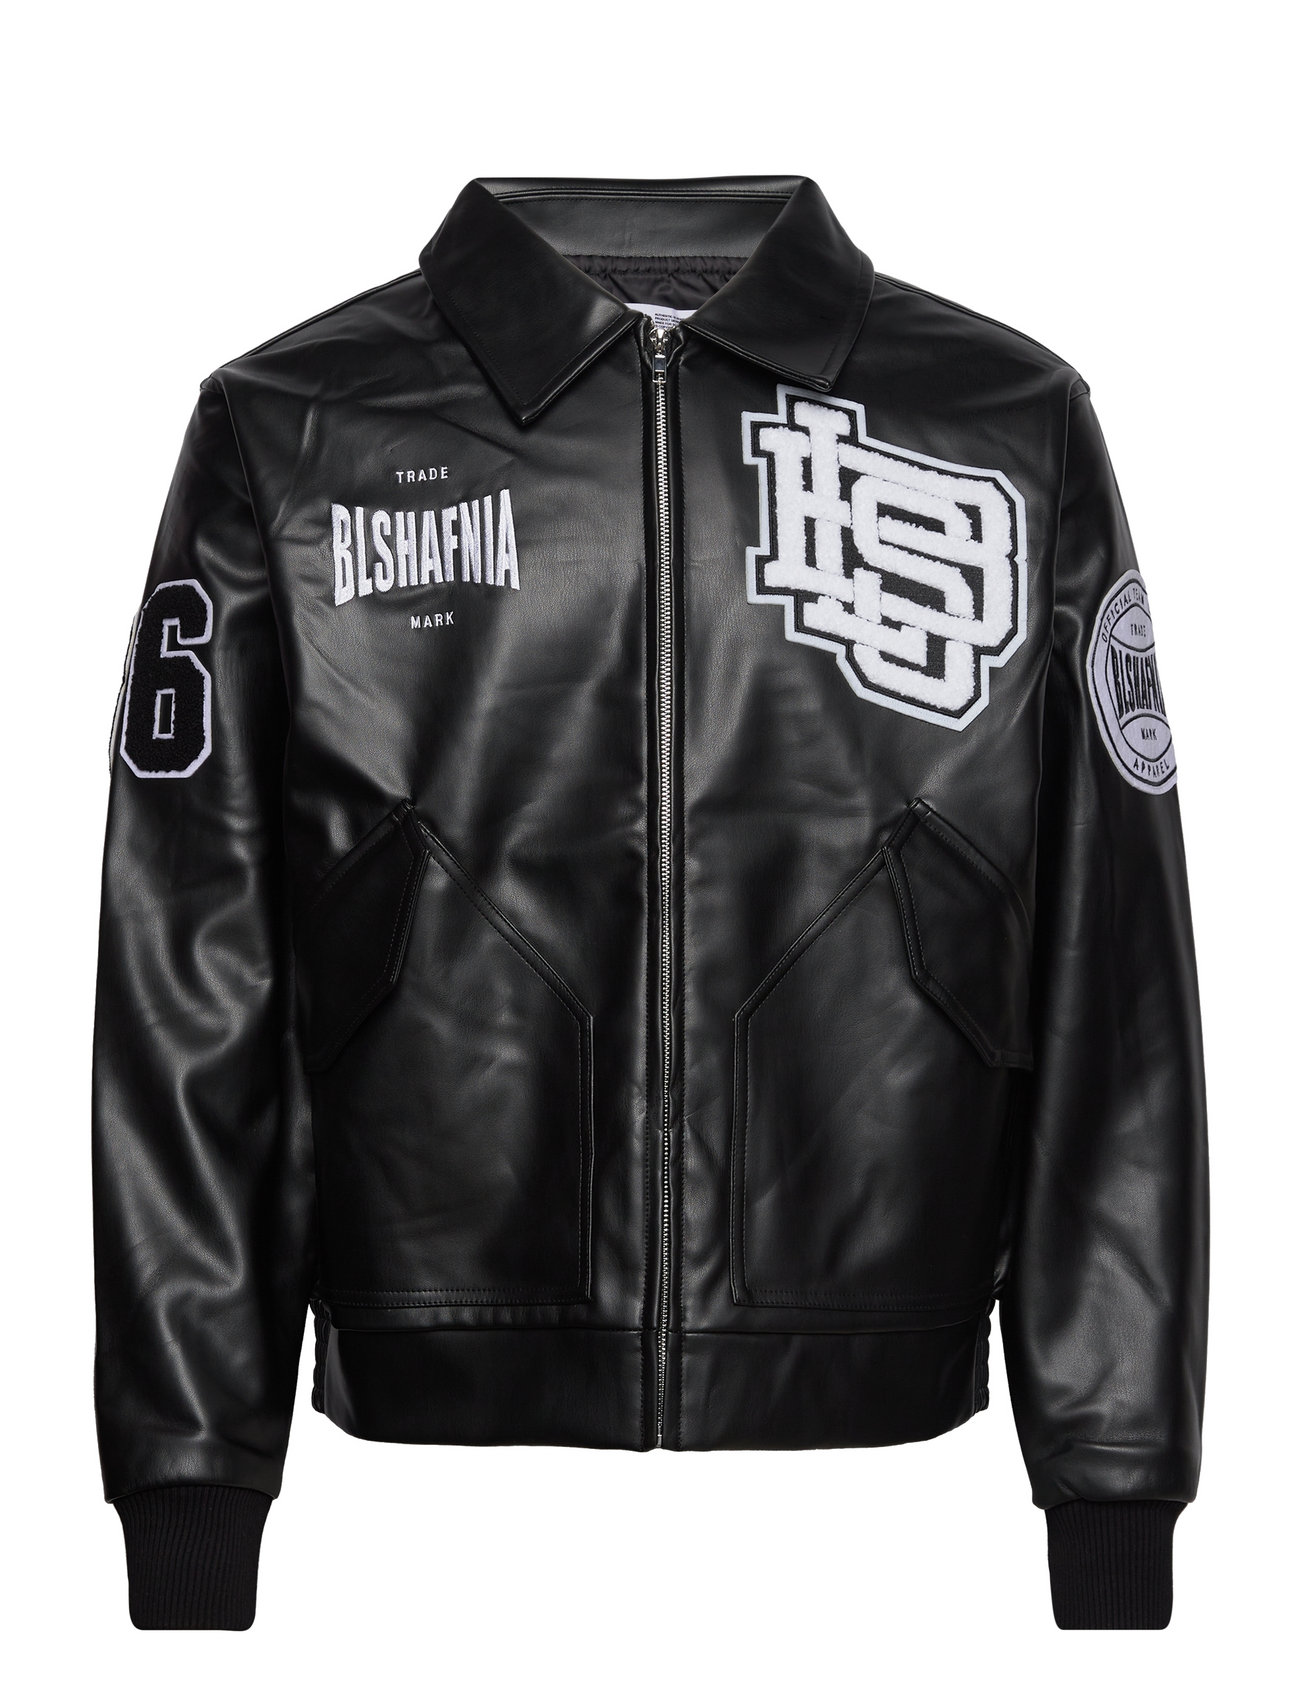 BLS Hafnia Coleman Jacket - 399 €. Buy Leather Jackets from BLS Hafnia ...